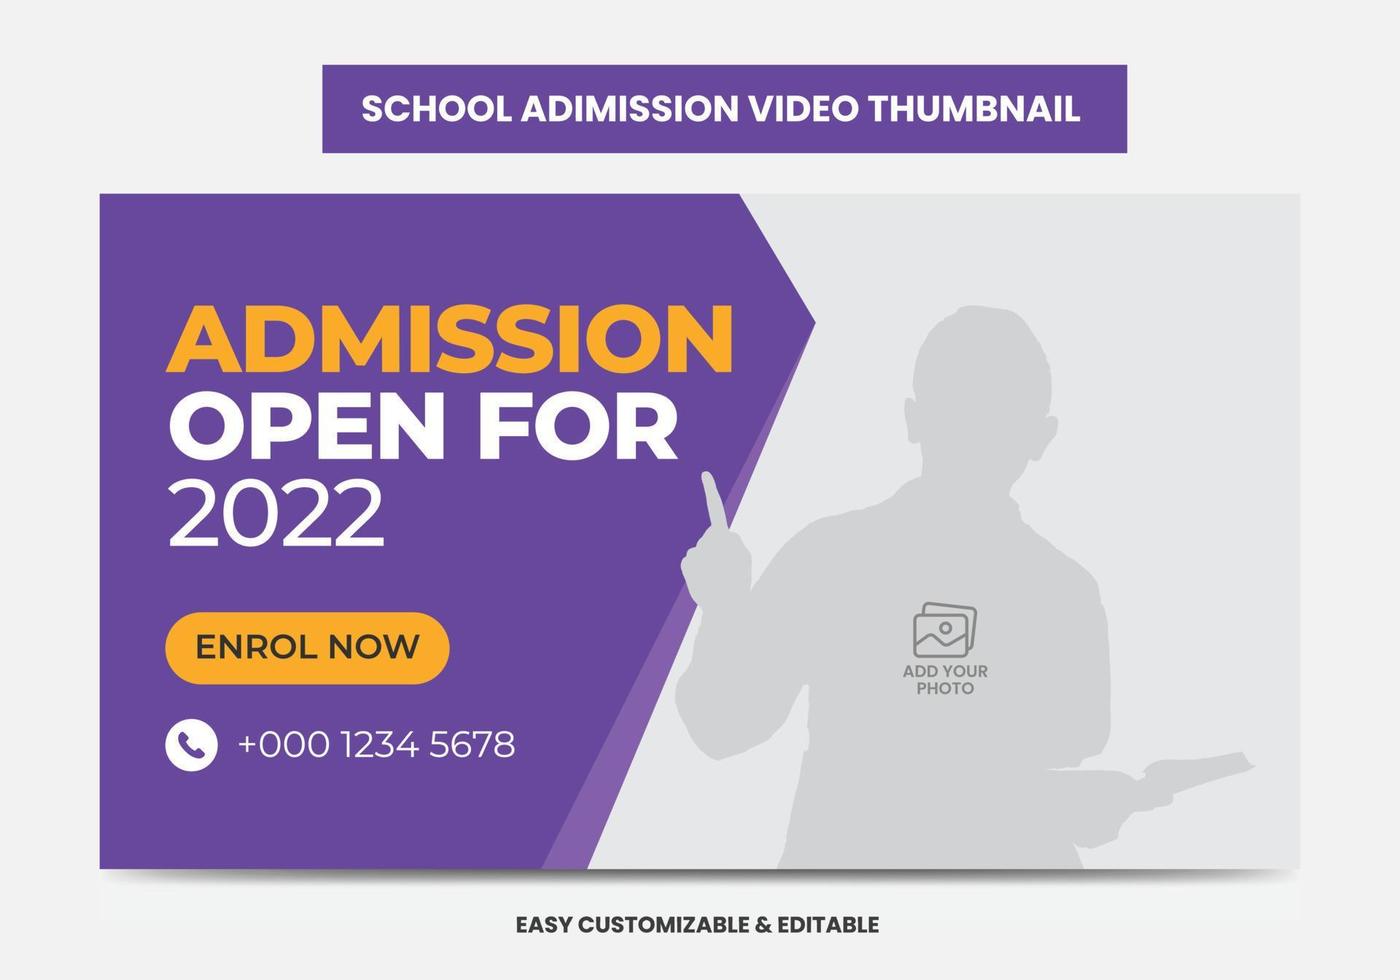 Junior admission school education video thumbnail and web banner. School admission video thumbnail vector